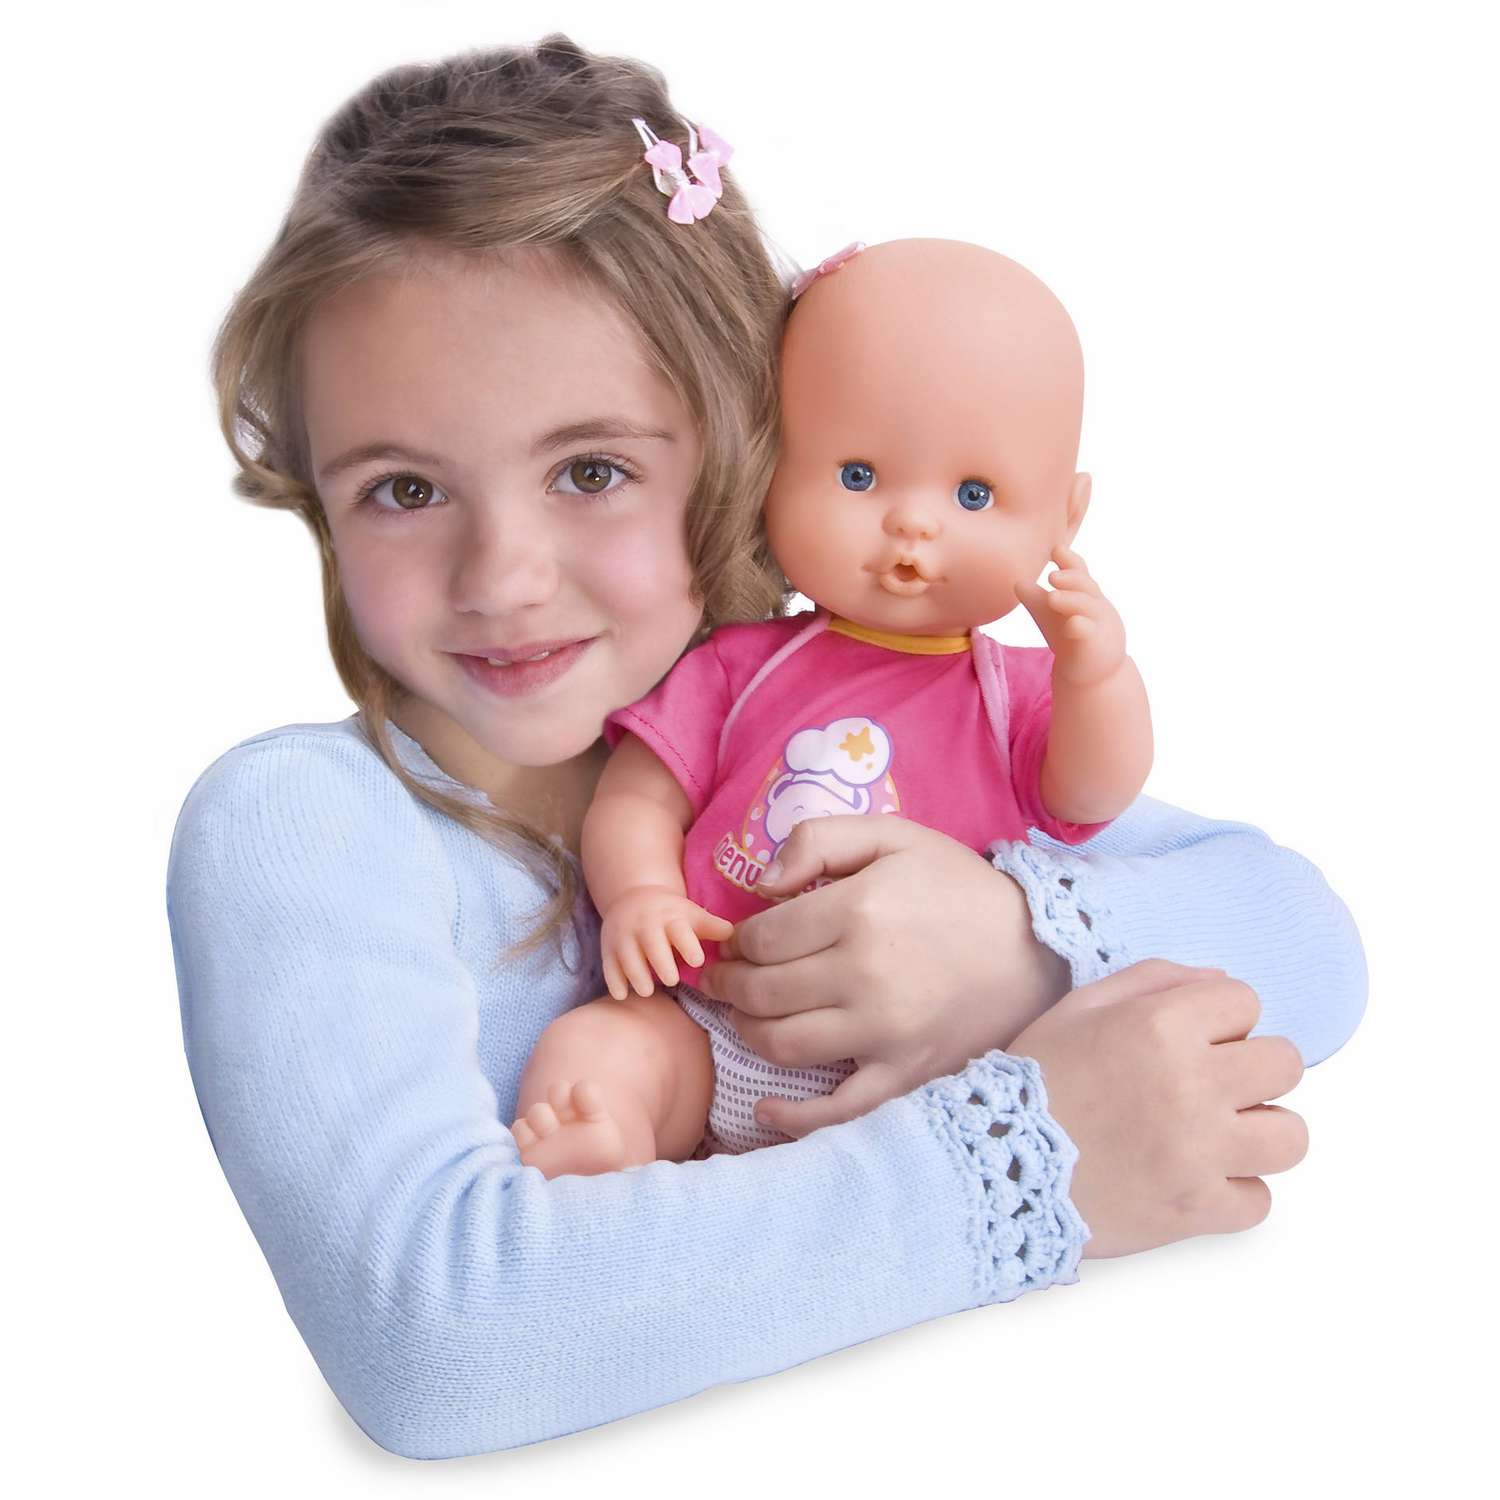 Кукла Famosa Ненуко с набором для кормления 700014057 70014057E8 - фото 4